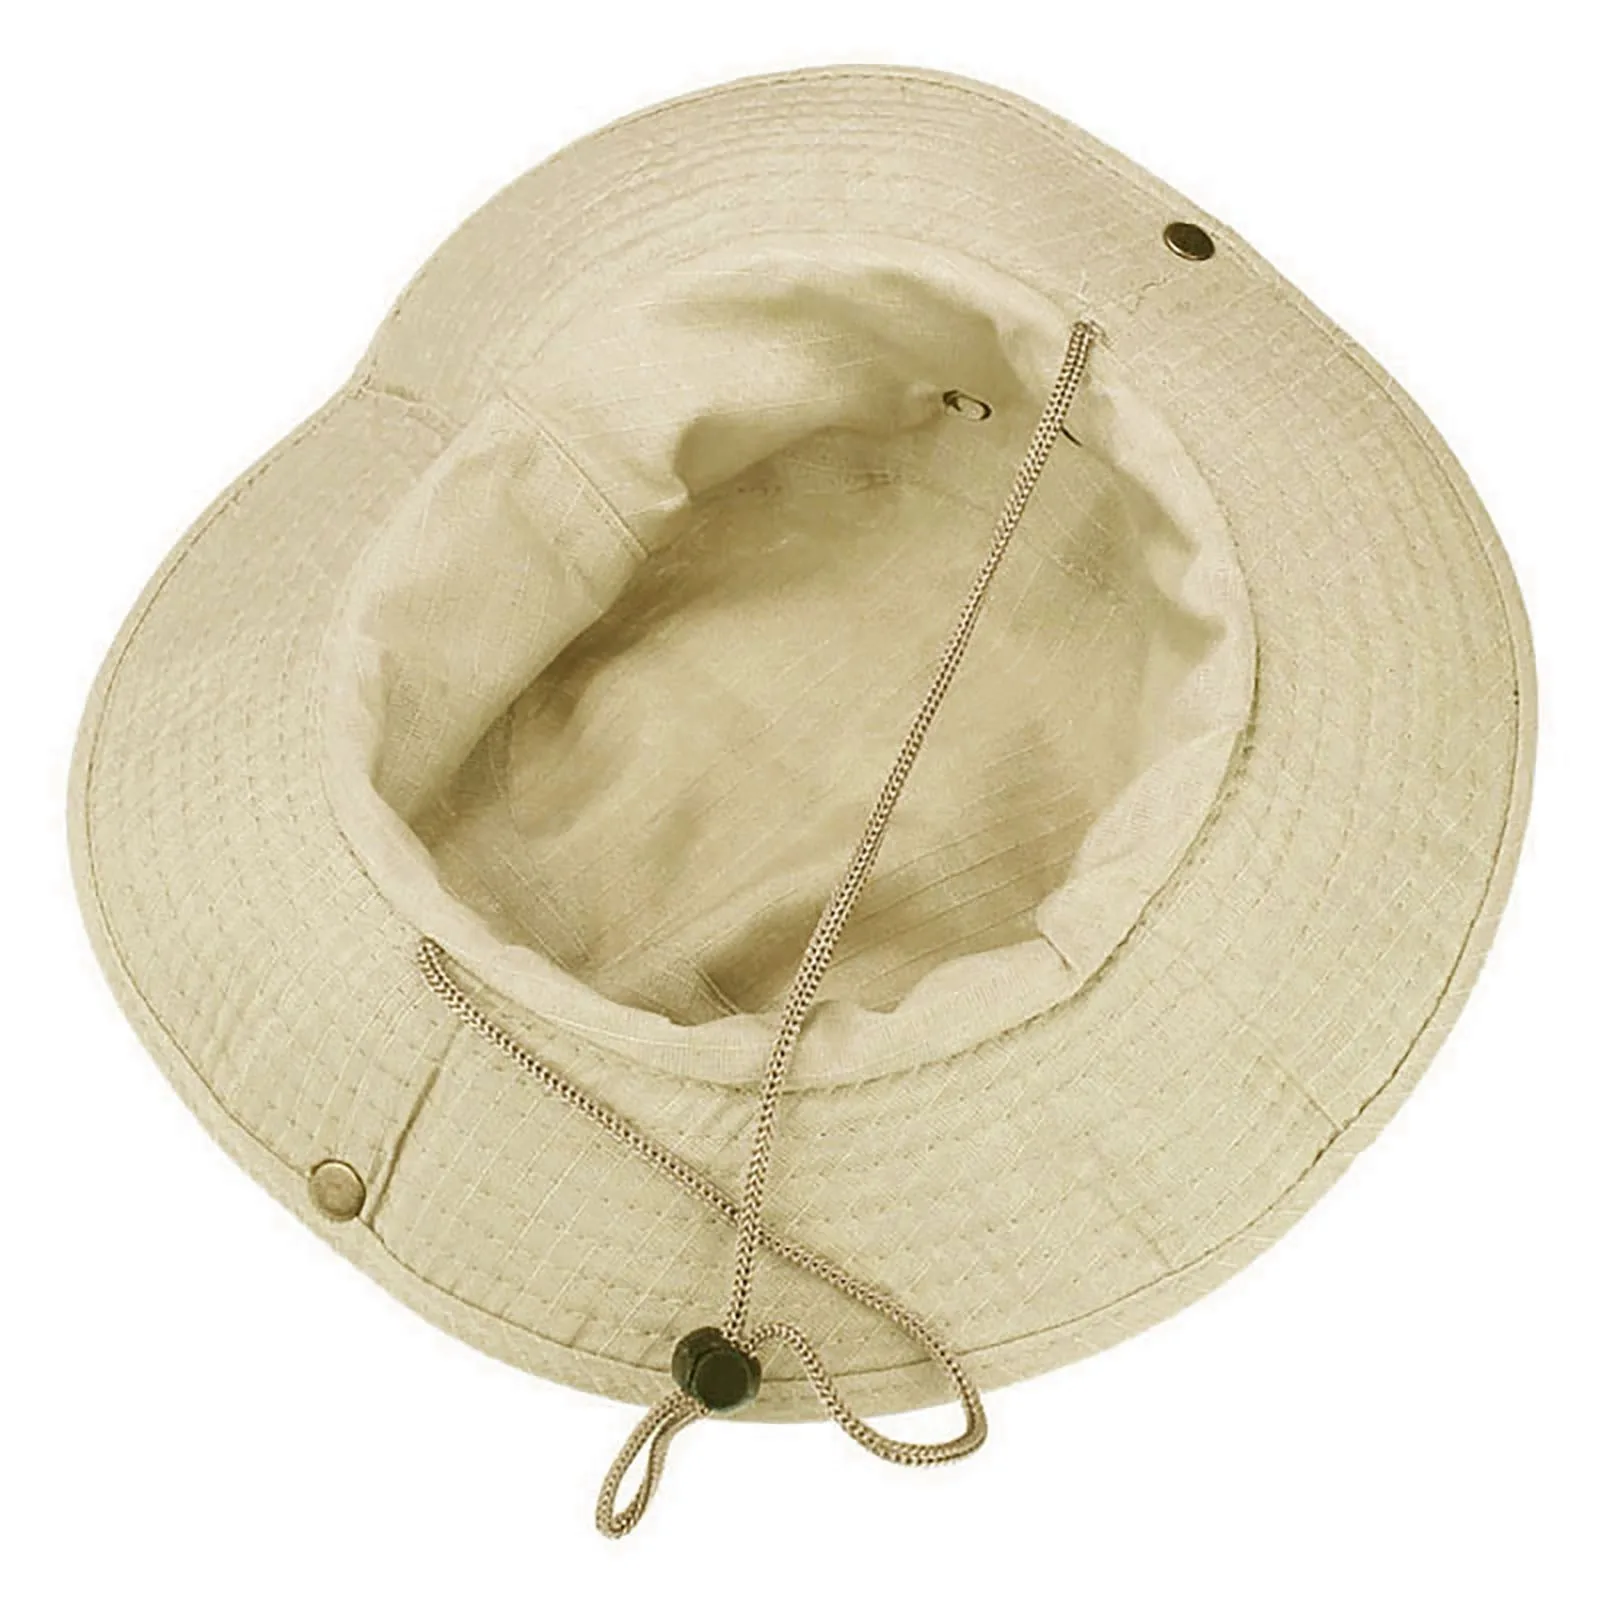 Bucket Hat Boonie Hunting Fishing Outdoor Wide Cap Military Beige Wide Brim Floppy Unisex Foldable Hiking Beach Fishing Cap